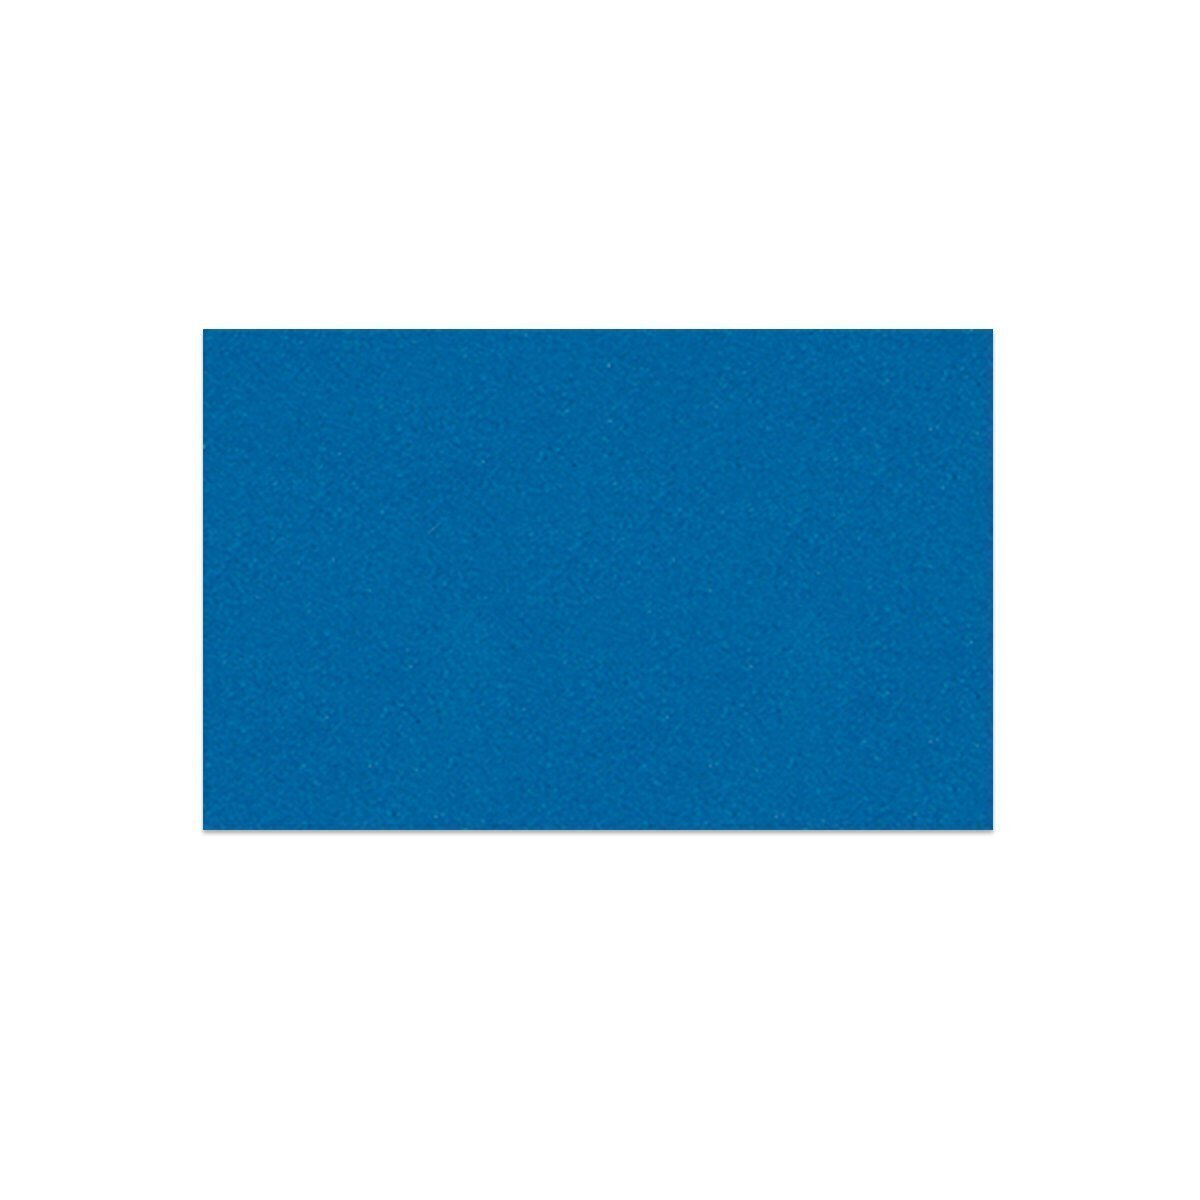 Mossgummi 2mm, 30 x 40 cm, 1 Bogen, dunkelblau